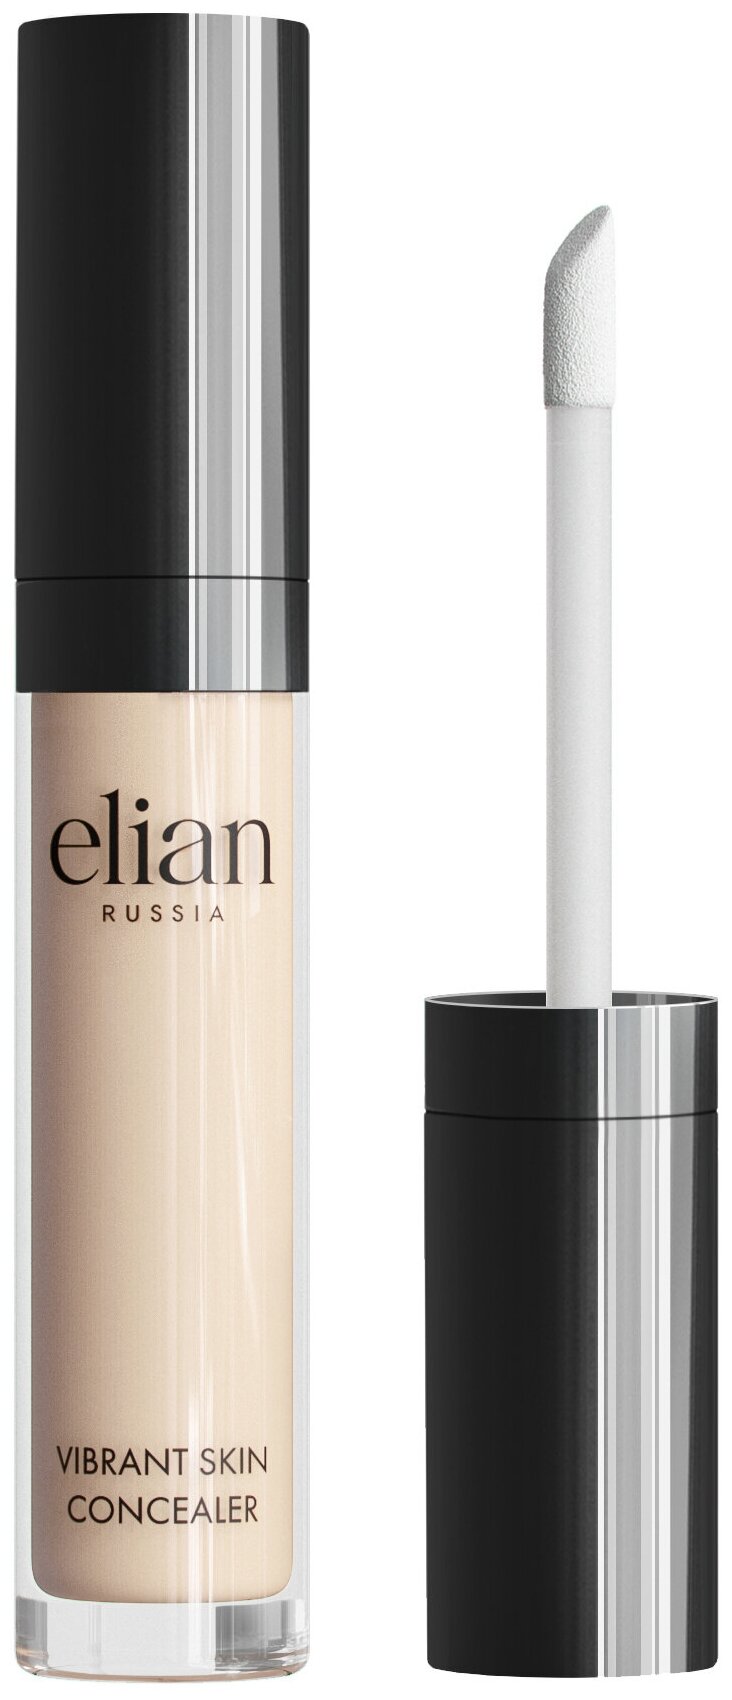   Vibrant Skin Concealer, Elian Russia (01 Fair)